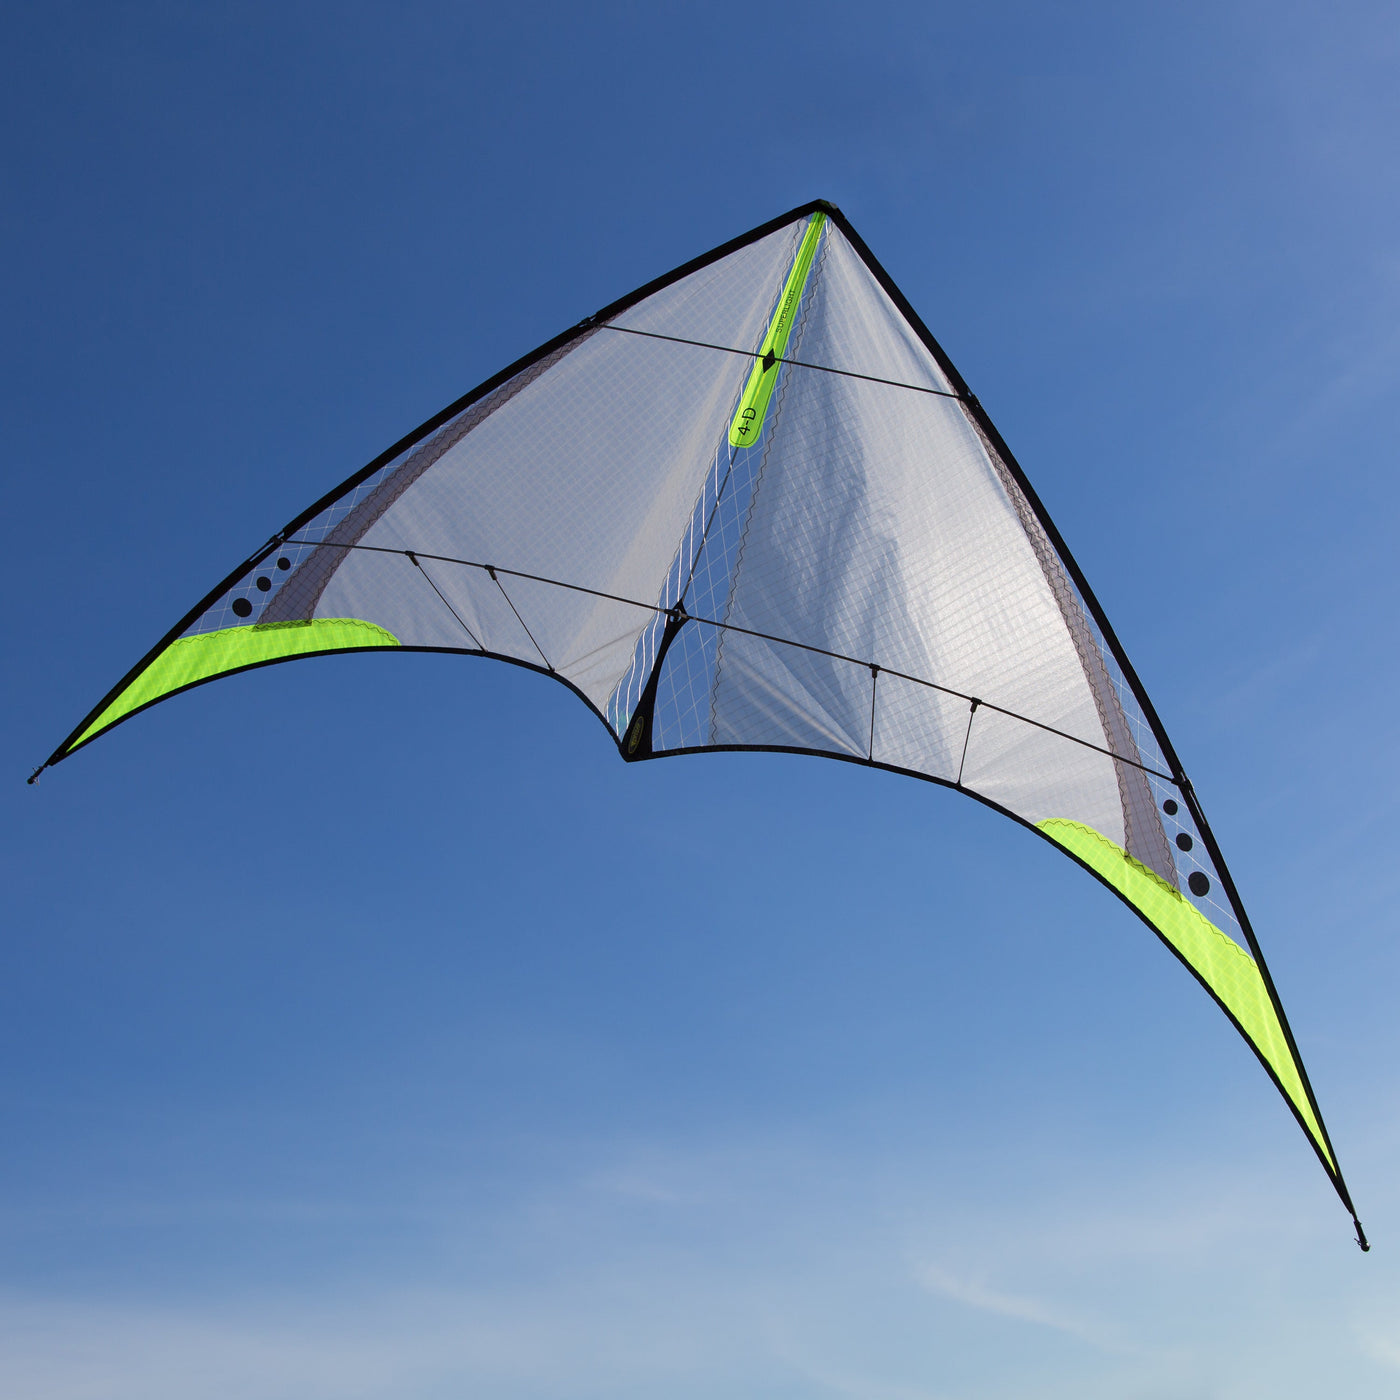 Graphite 4D Superlight stunt kite in sky